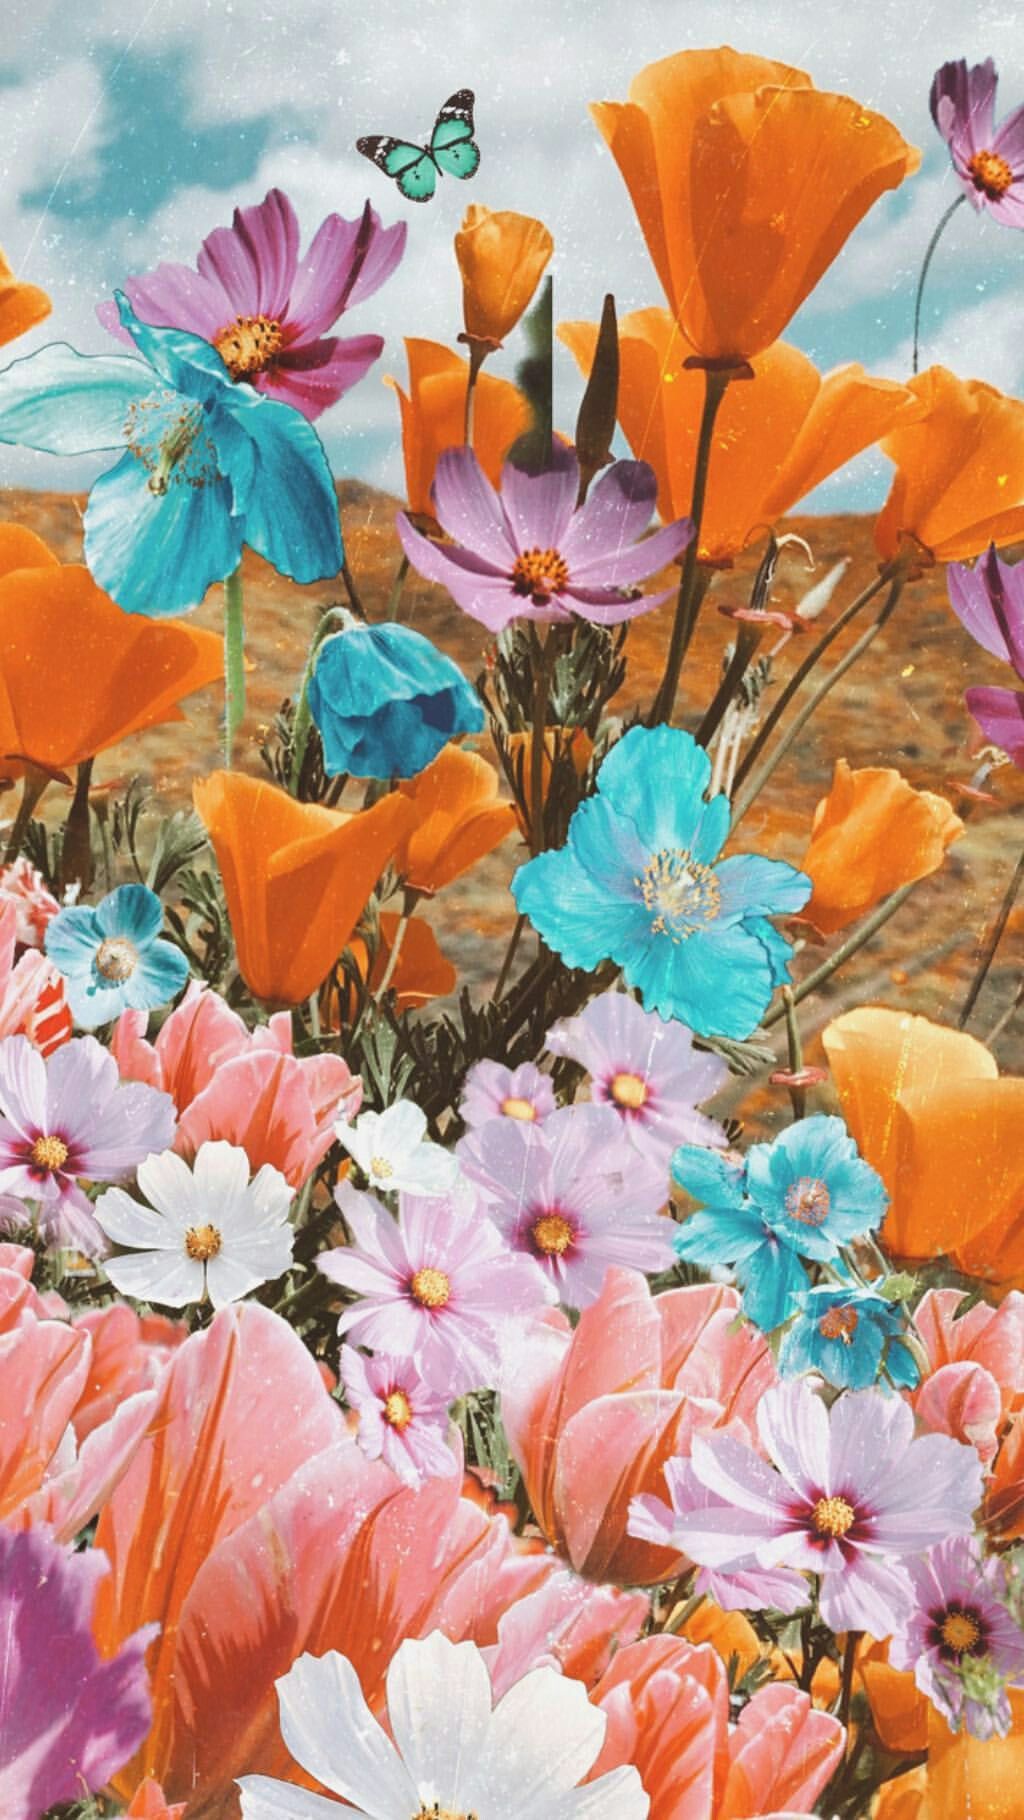 flower #flowers #plants #botanical #floral #beautiful #wallpaper #background #nature #travel. Flower iphone wallpaper, Flower phone wallpaper, Flower wallpaper